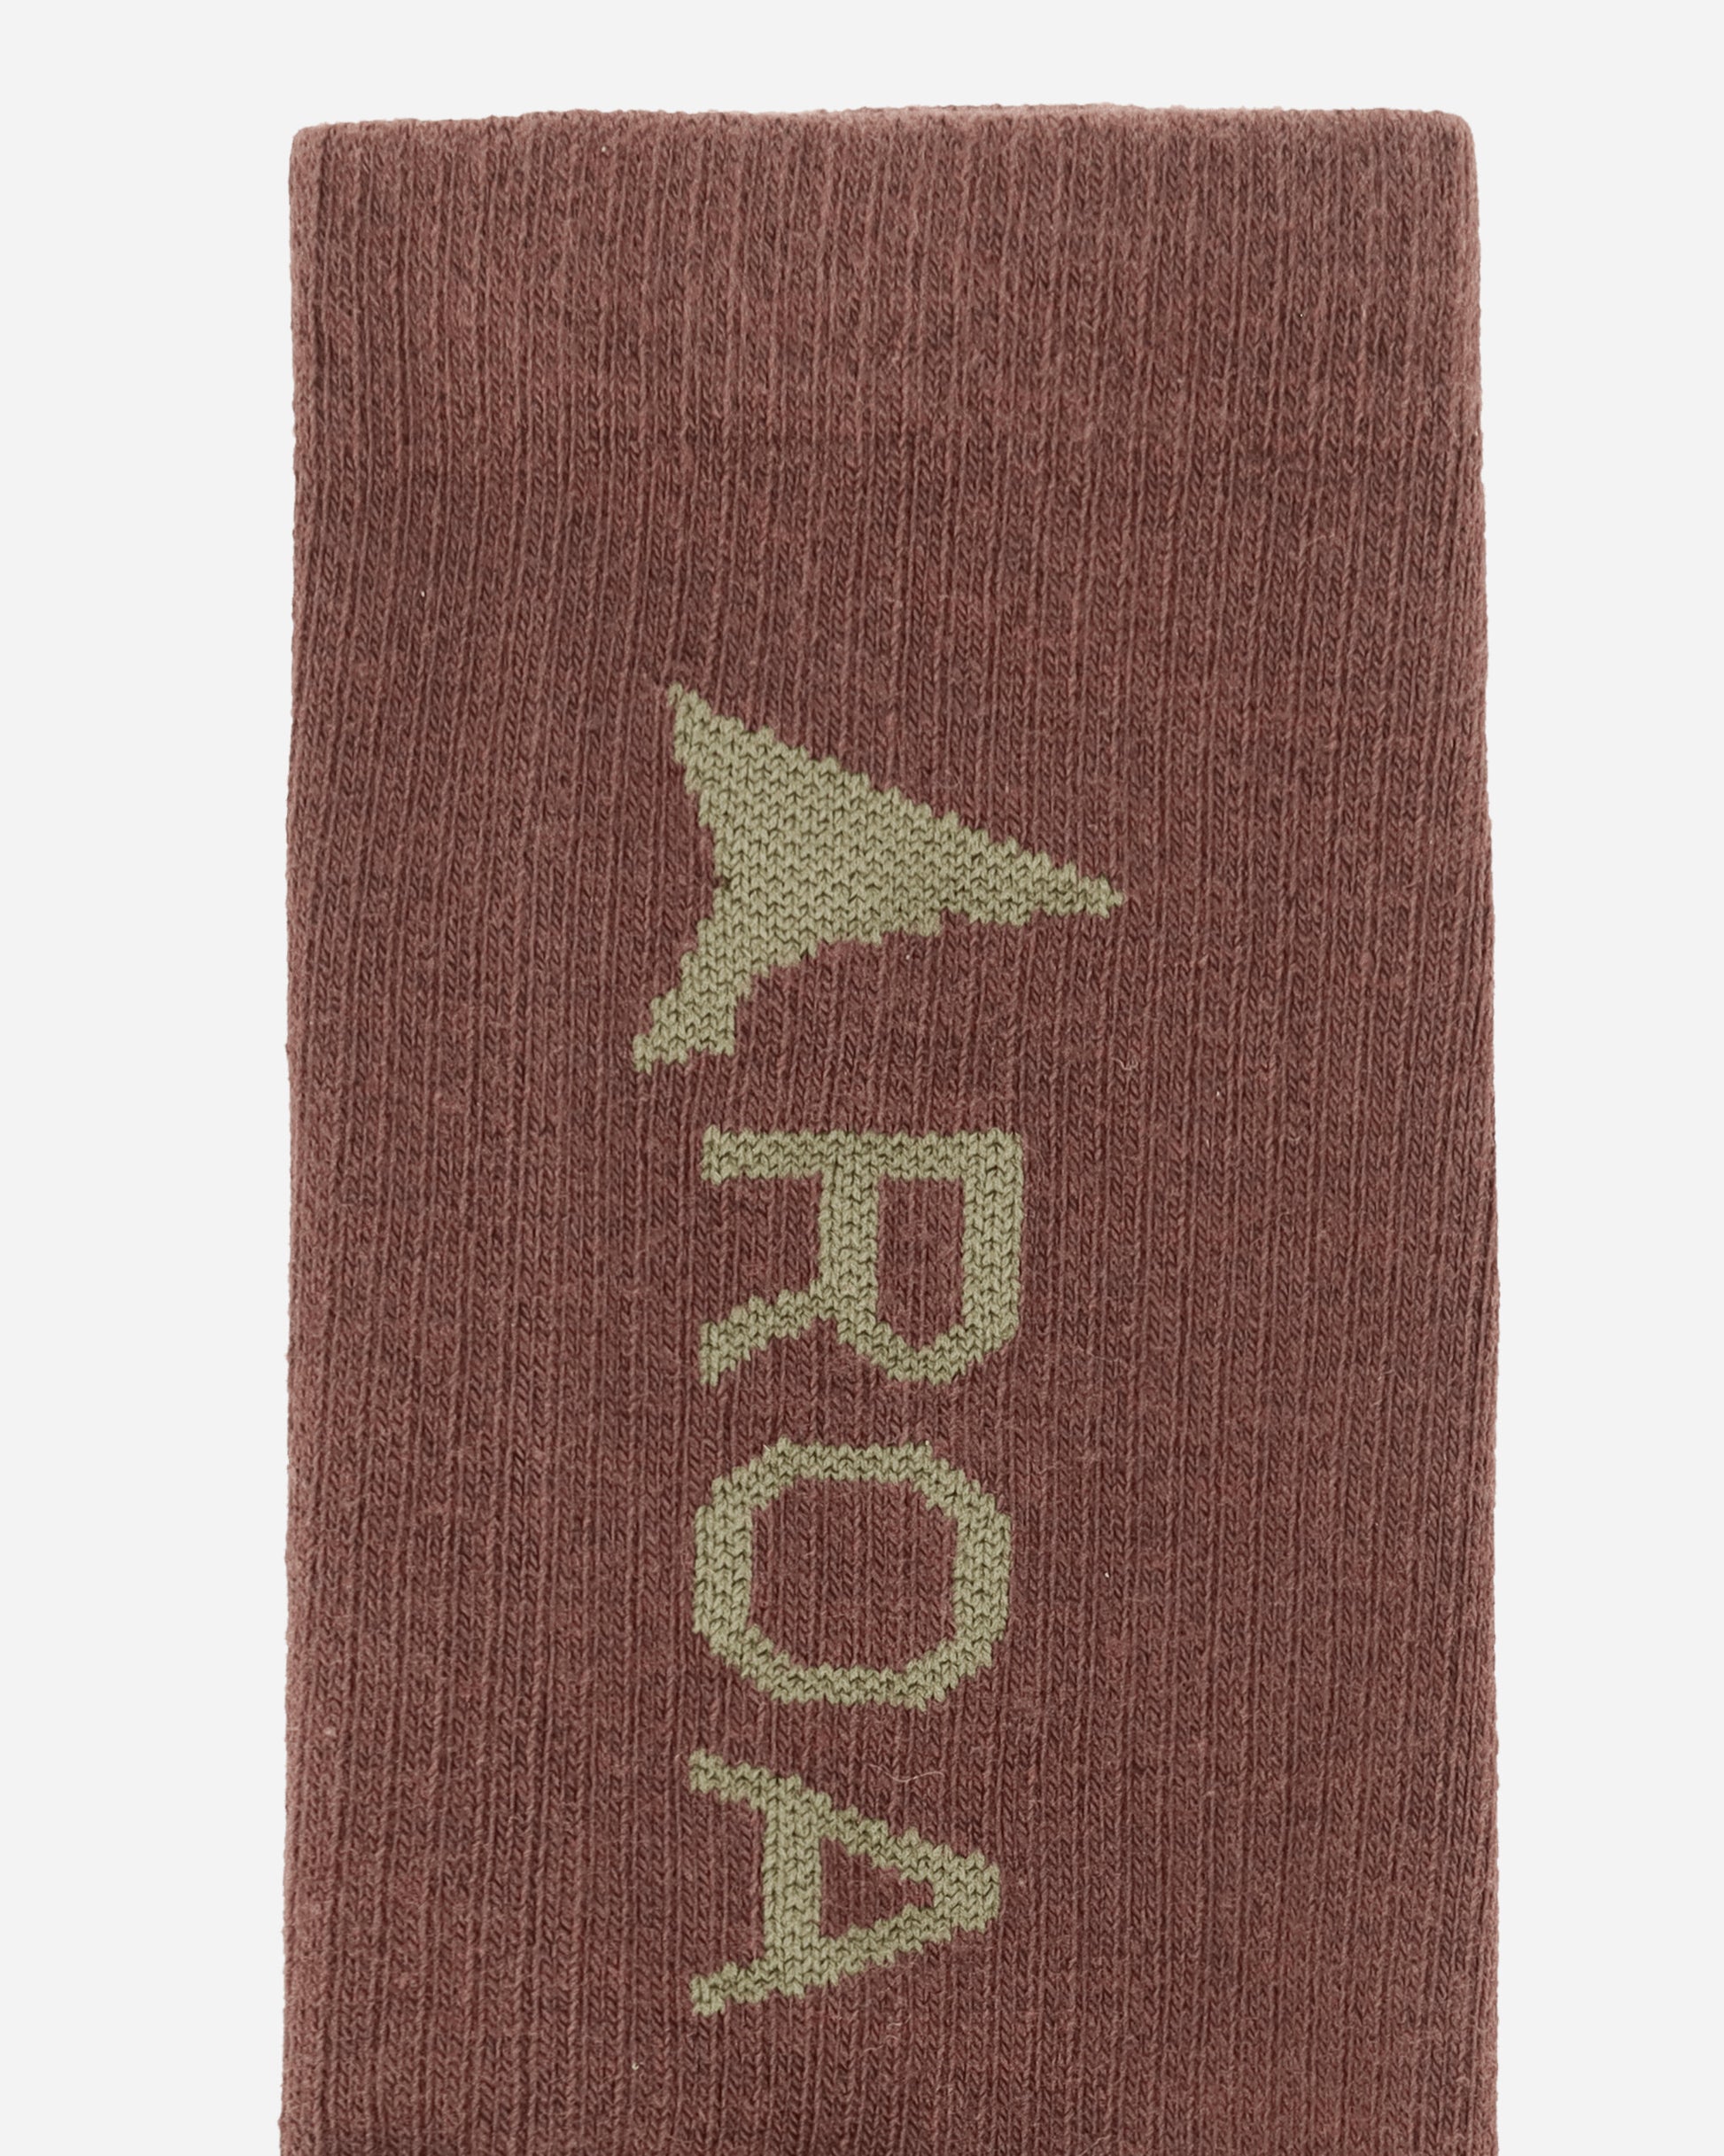 ROA Logo Socks Brown Underwear Socks RBMW079YA04 BRW0001